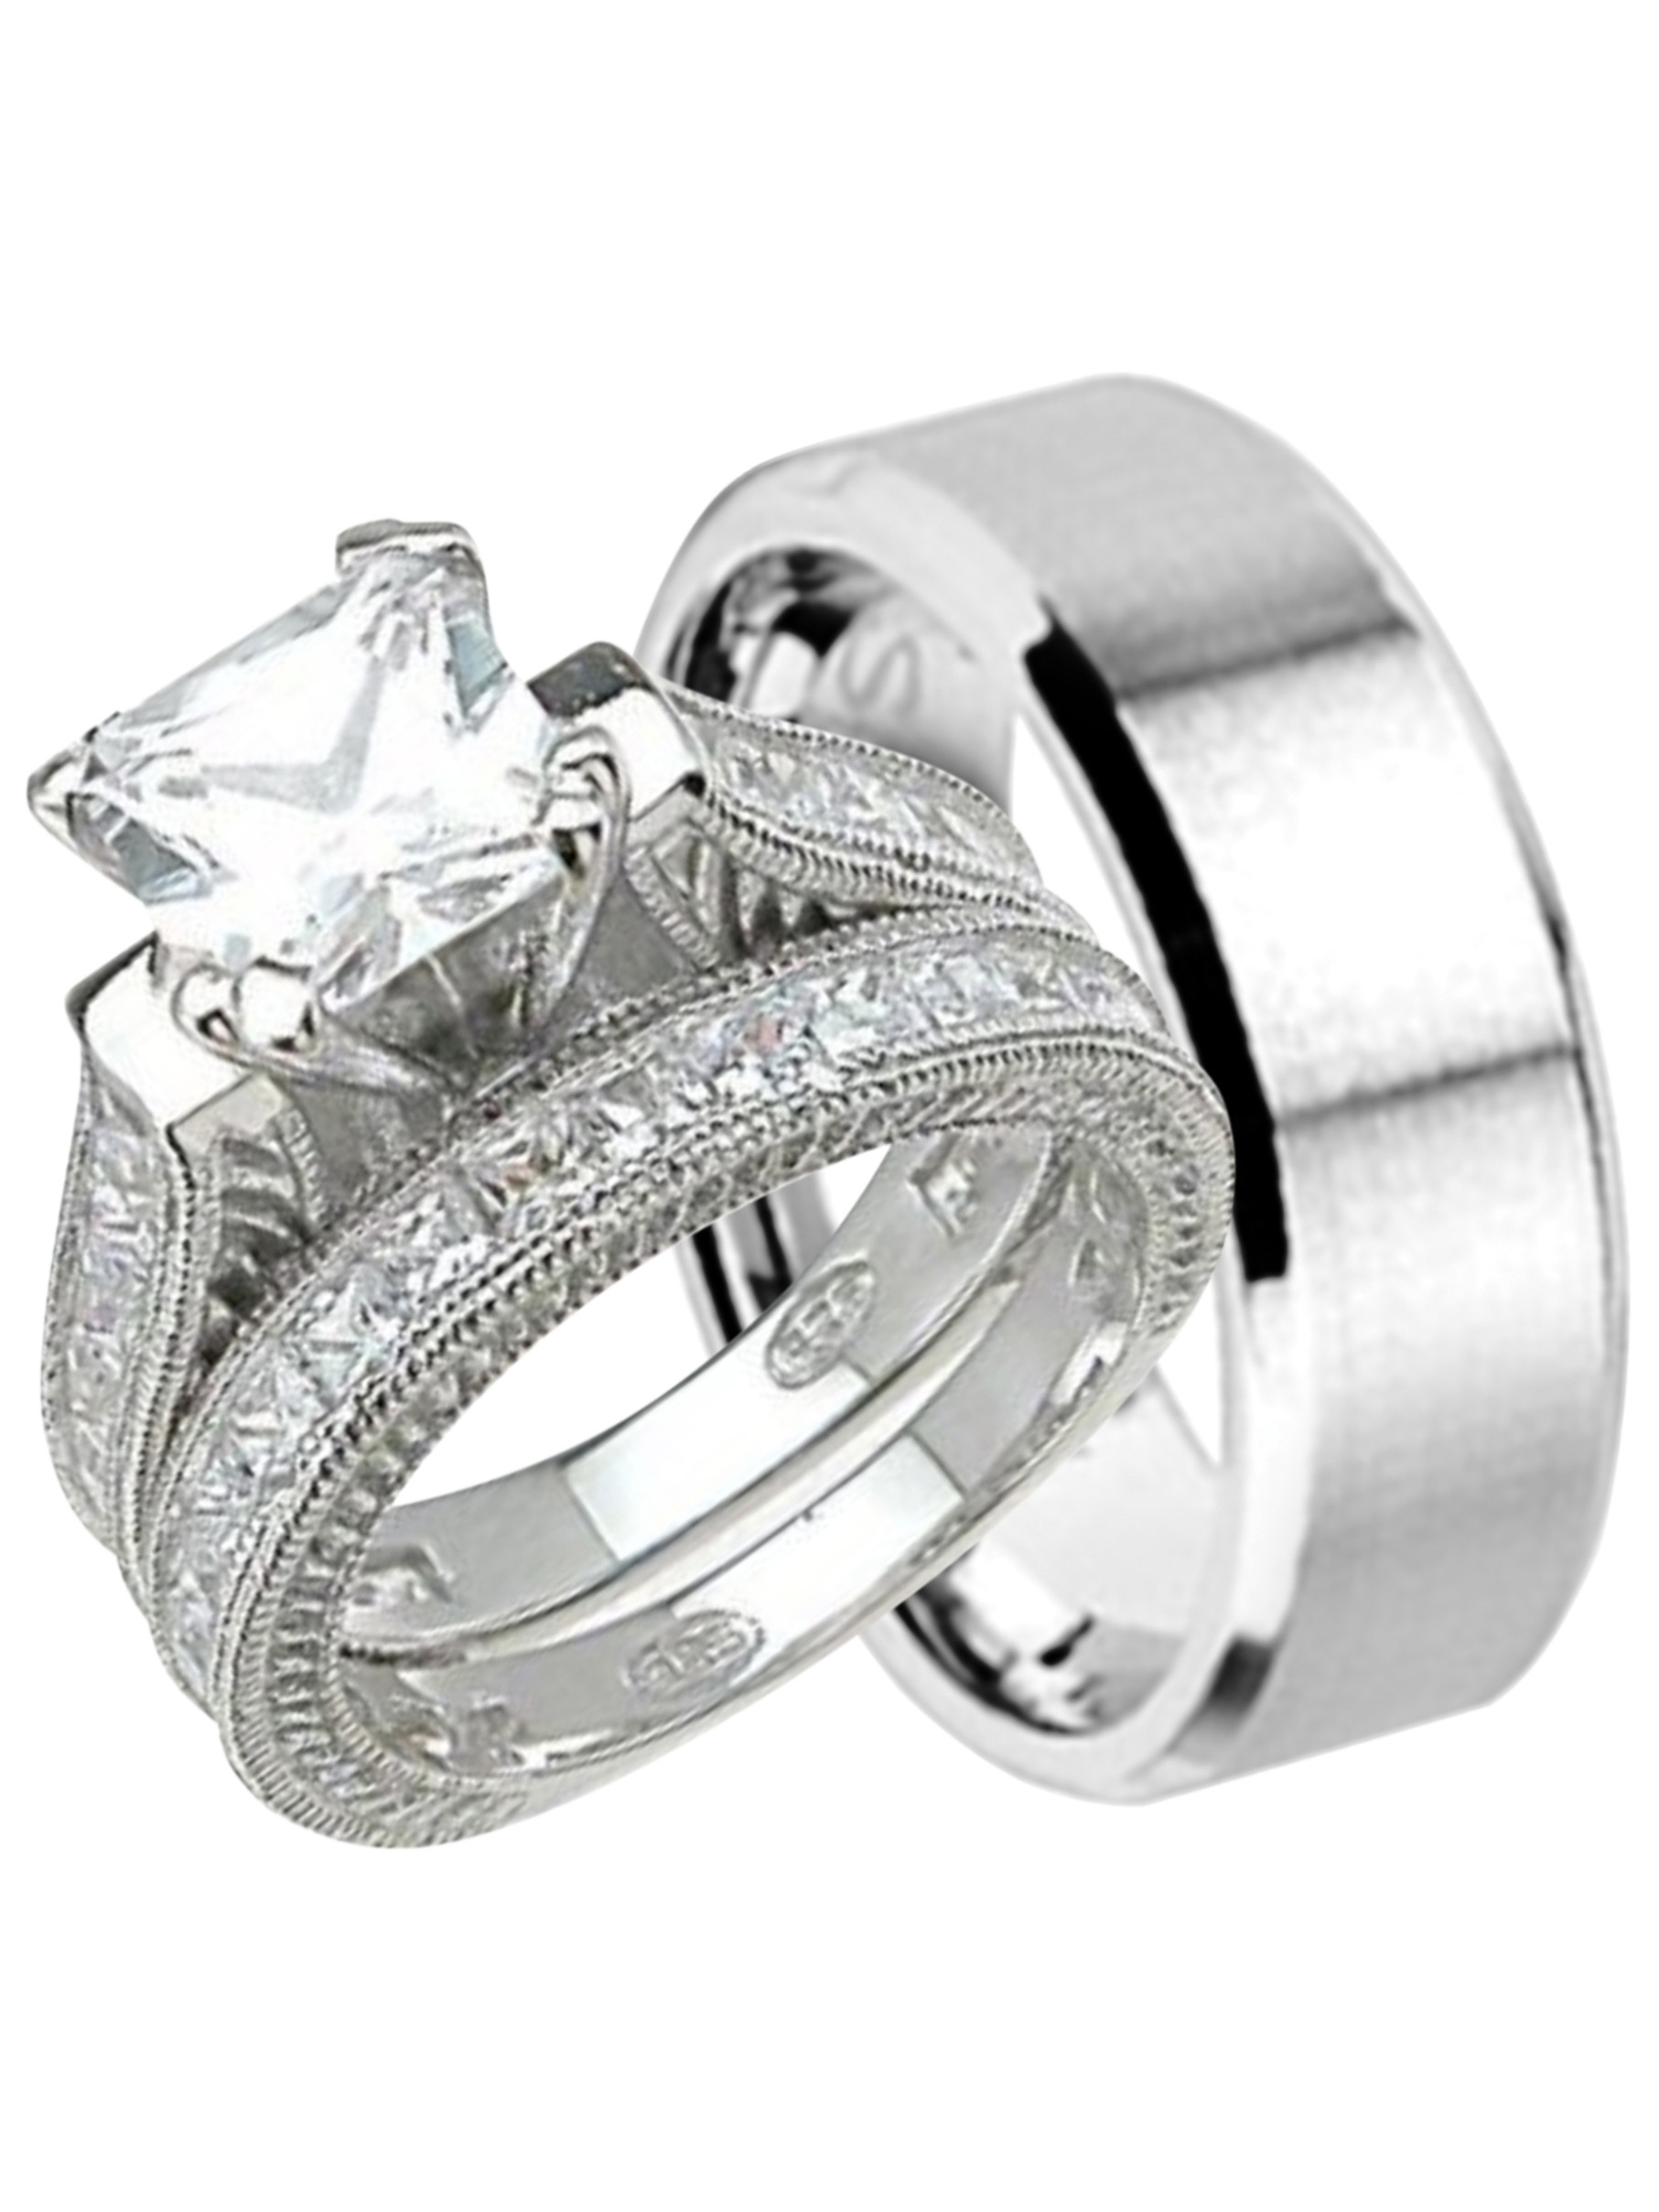 Walmart Wedding Rings For Him
 LaRaso & Co His and Hers Wedding Ring Set Cheap Wedding